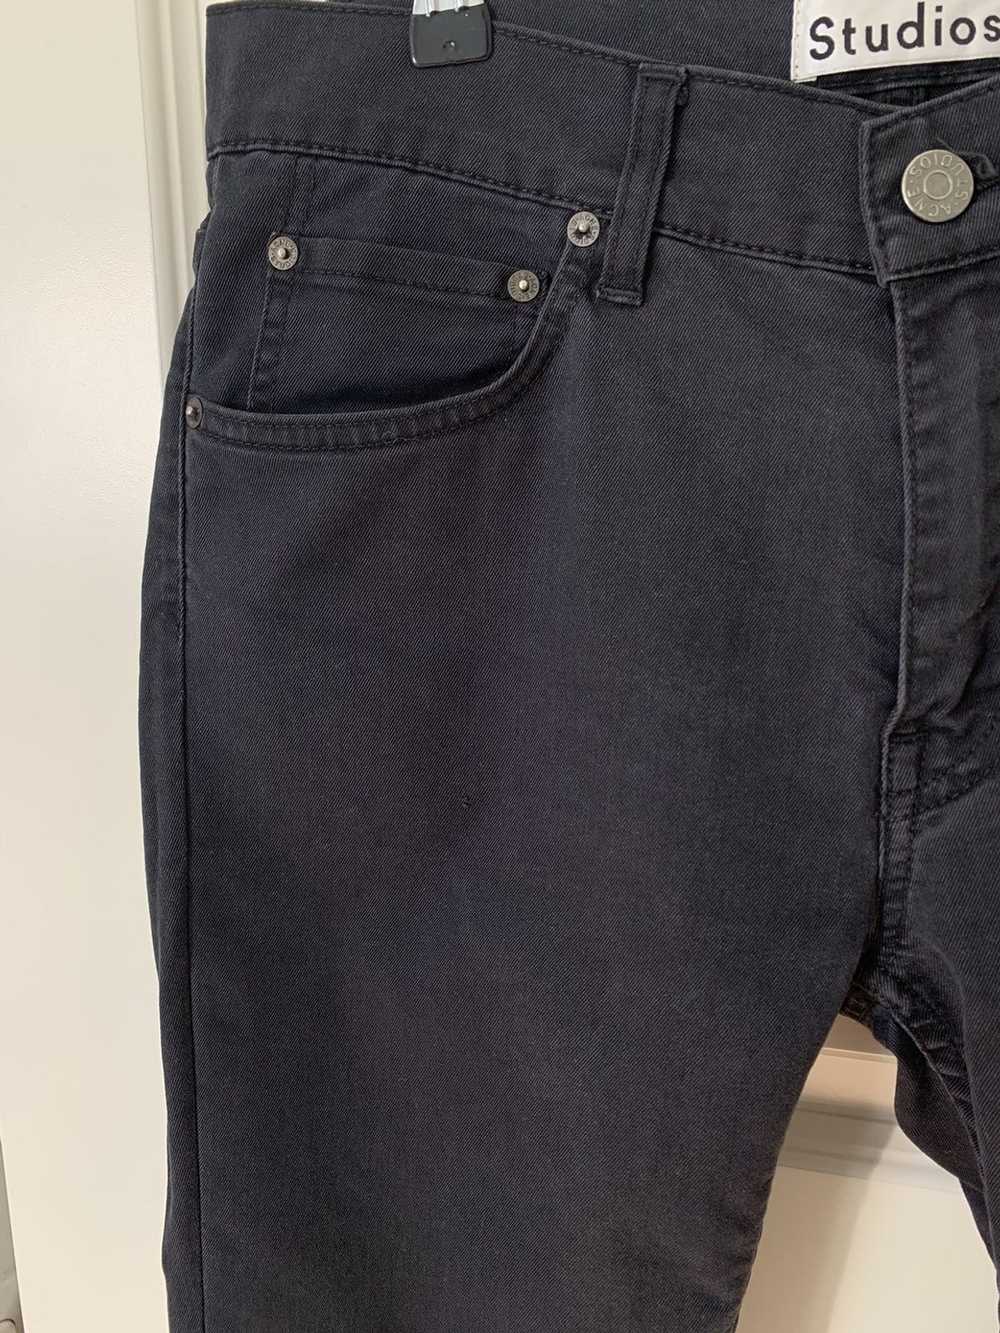 Acne Studios Ace UPS Black jeans - image 3